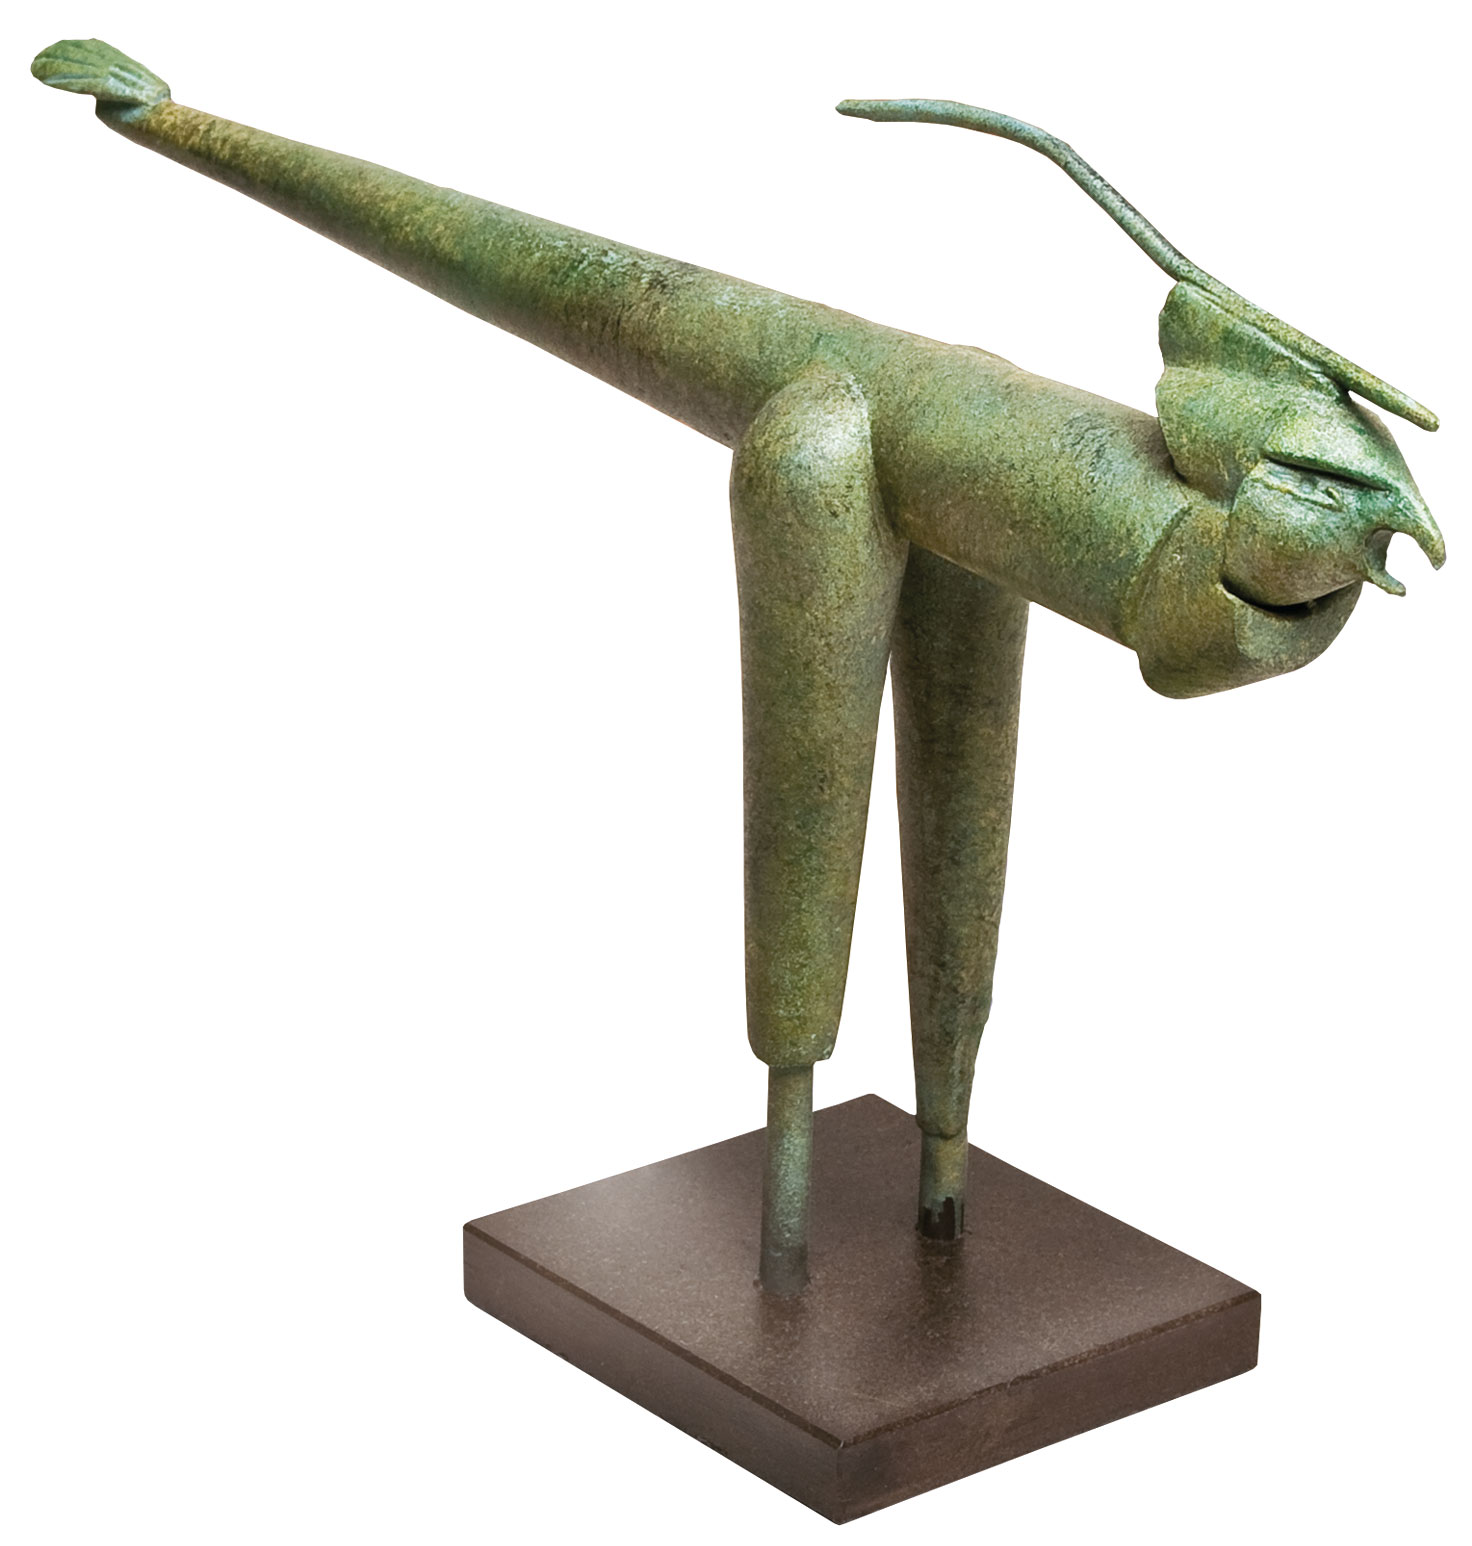 Sculpture "Small Bird of Prey", cast metal by Paul Wunderlich